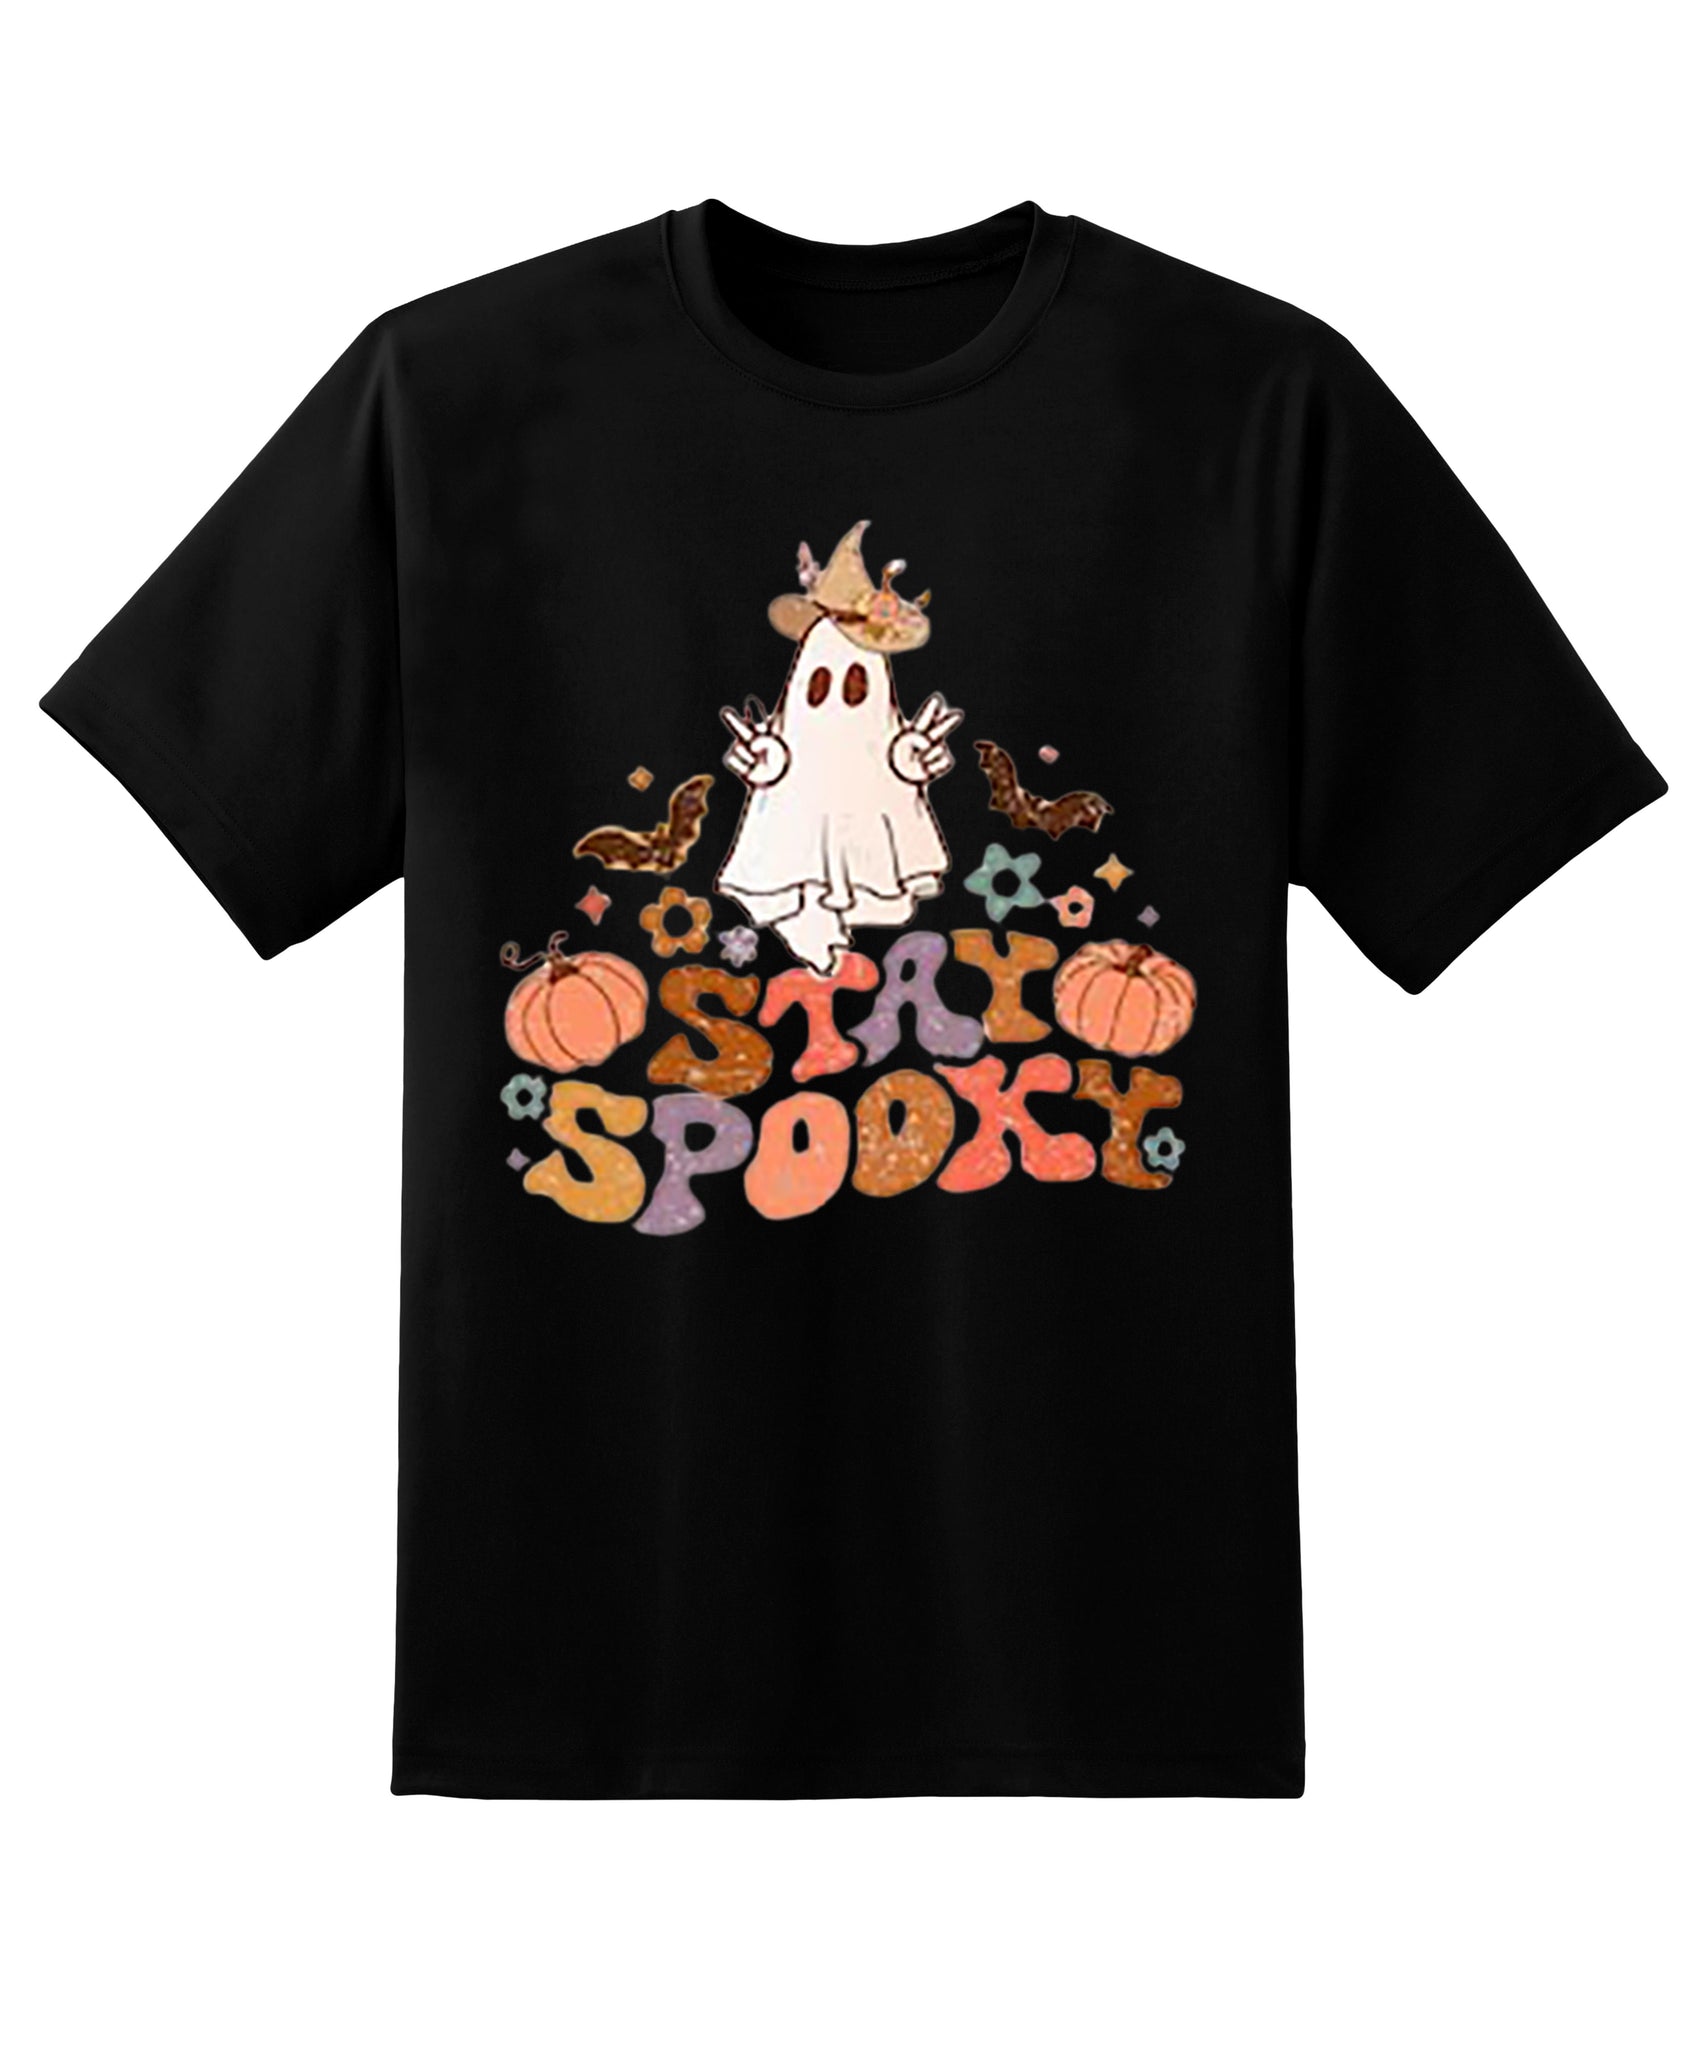 Skitongift Stay Spooky T-Shirt, Spooky Season Shirt,Ghost Halloween,Halloween Gift Hoodie,Womens Halloween T-Shirt